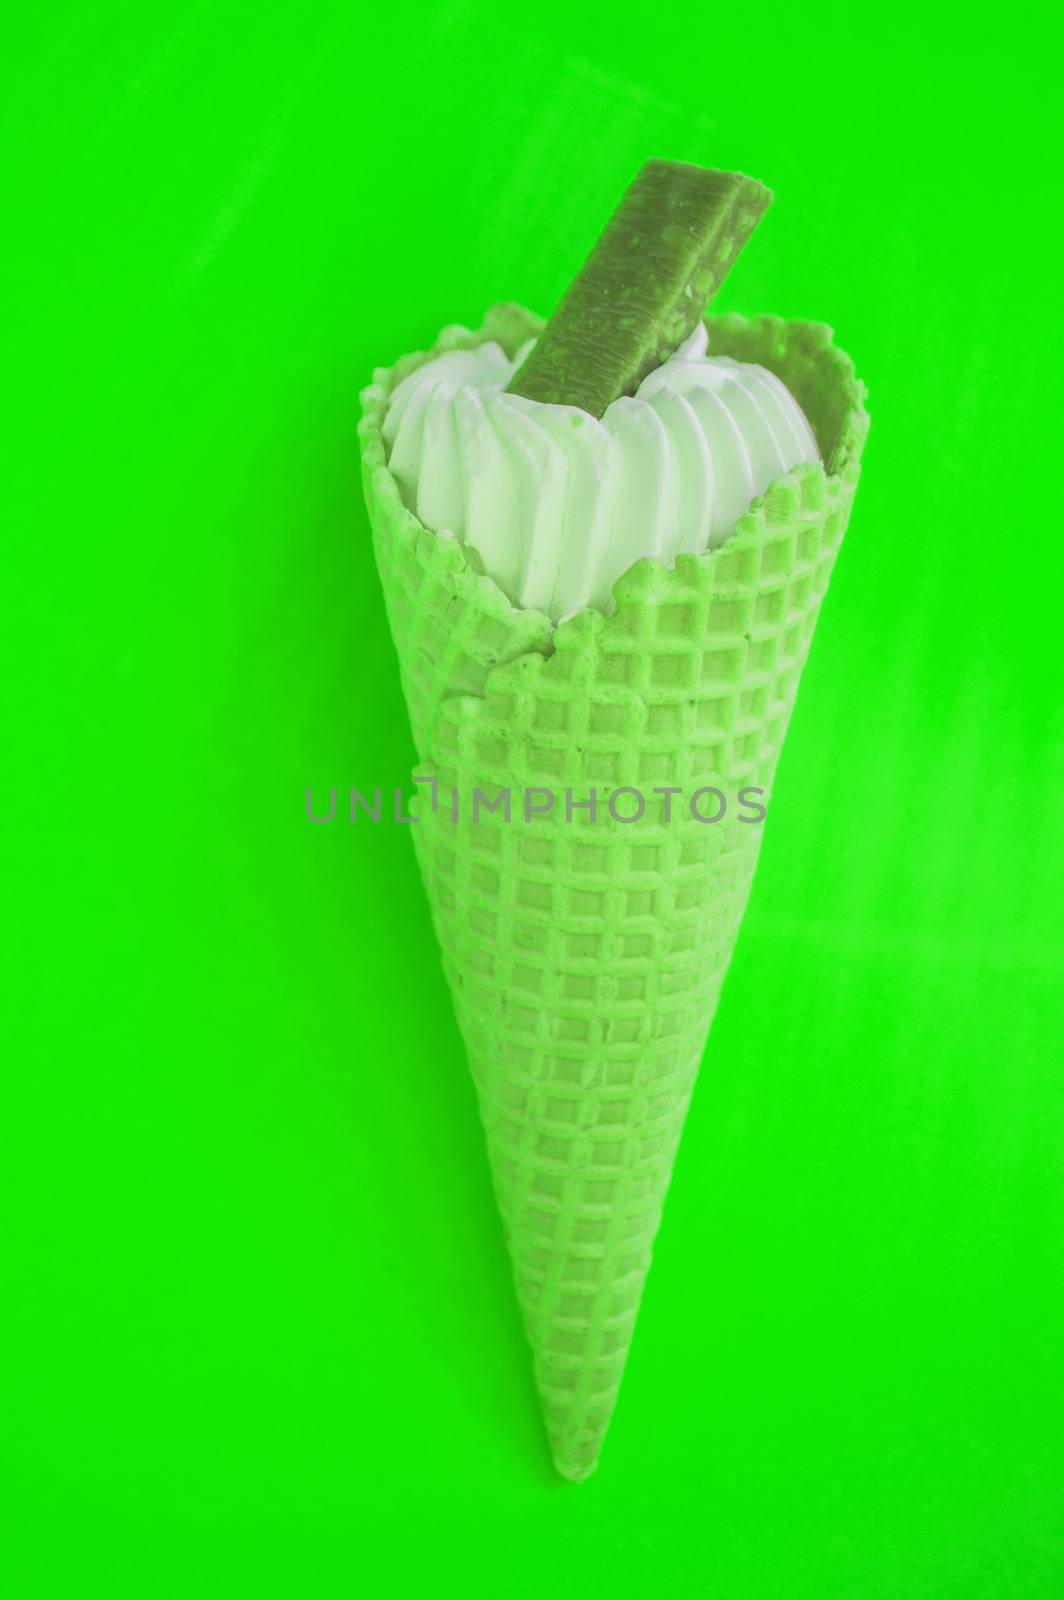 Ice cream CONE NEON COLORS pop art art Flatley, bright green background by claire_lucia